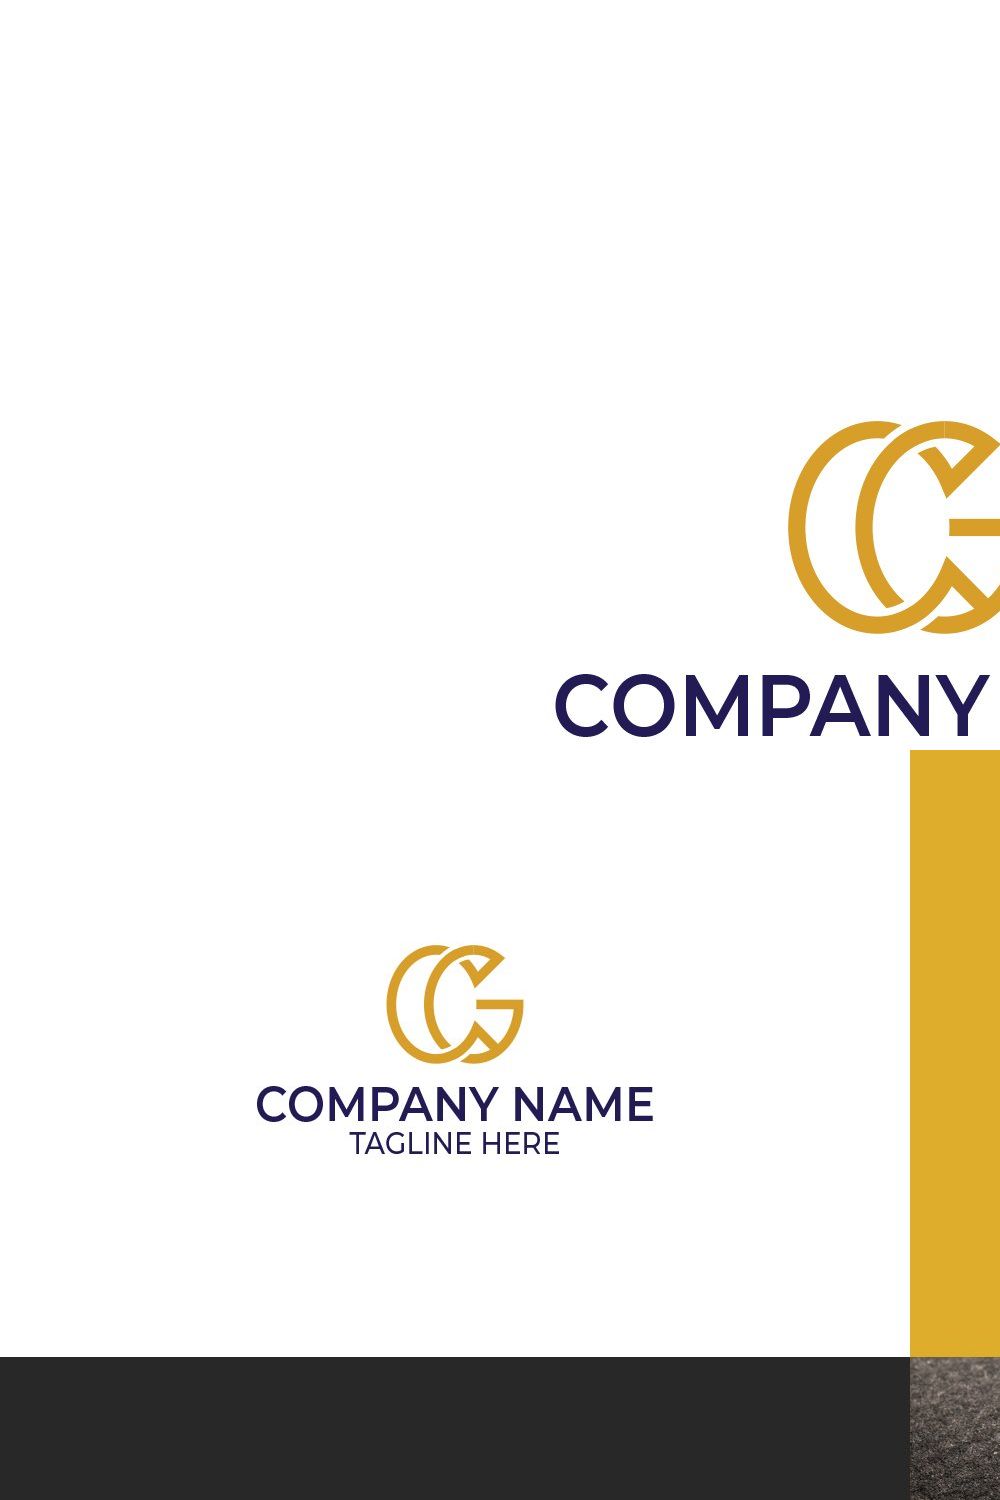 CG Monogram Logo | C Logo pinterest preview image.